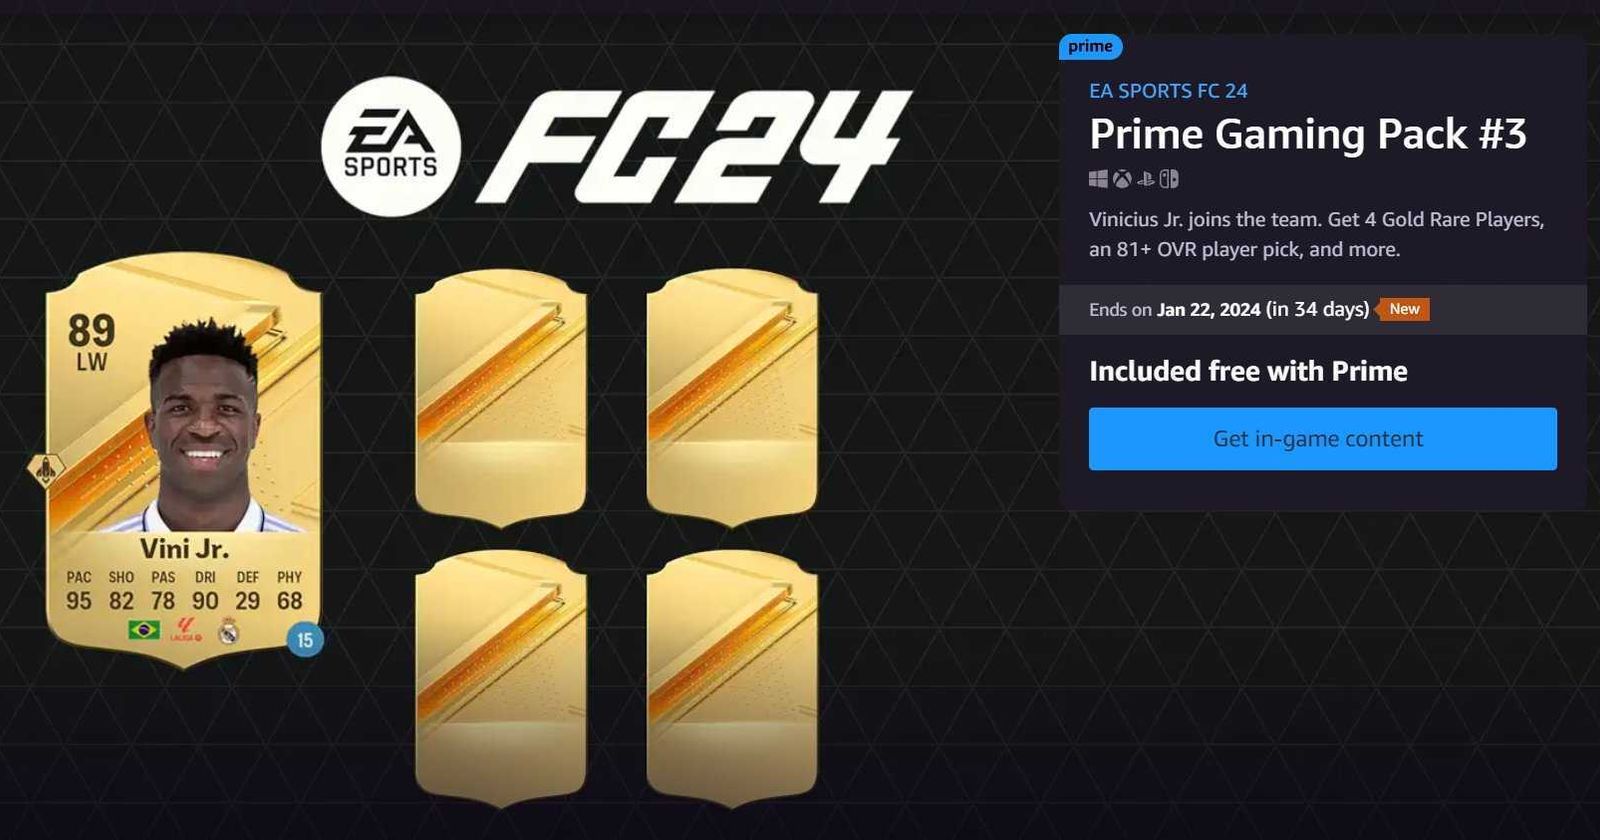 EA FC 24 Twitch Prime Gaming rewards